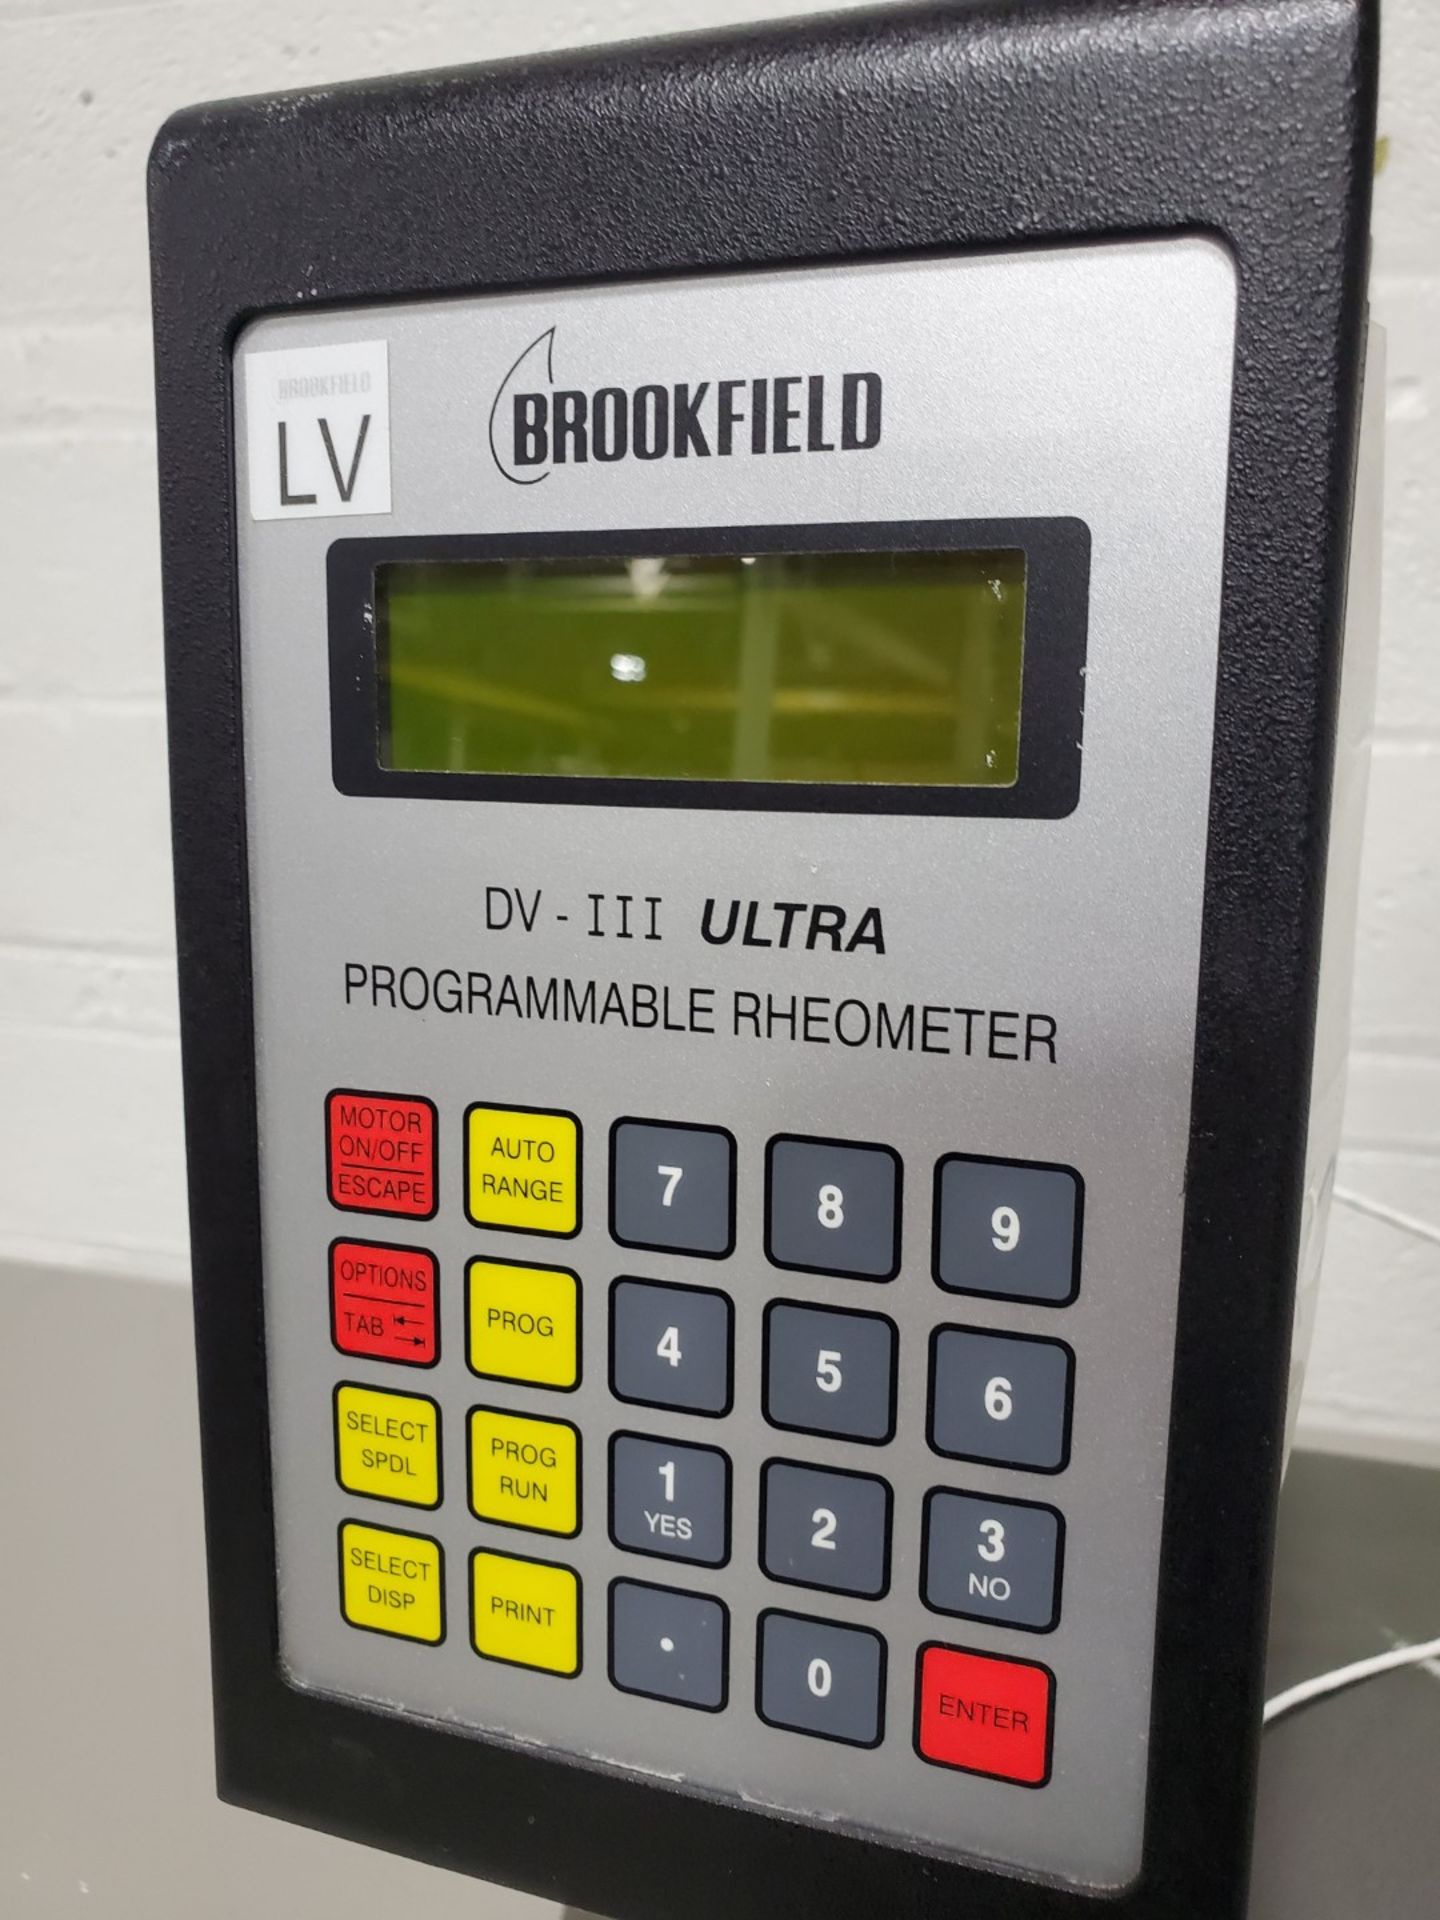 Brookfield Programmable Rheometer, Model DU-111 ULTRA - Image 6 of 8